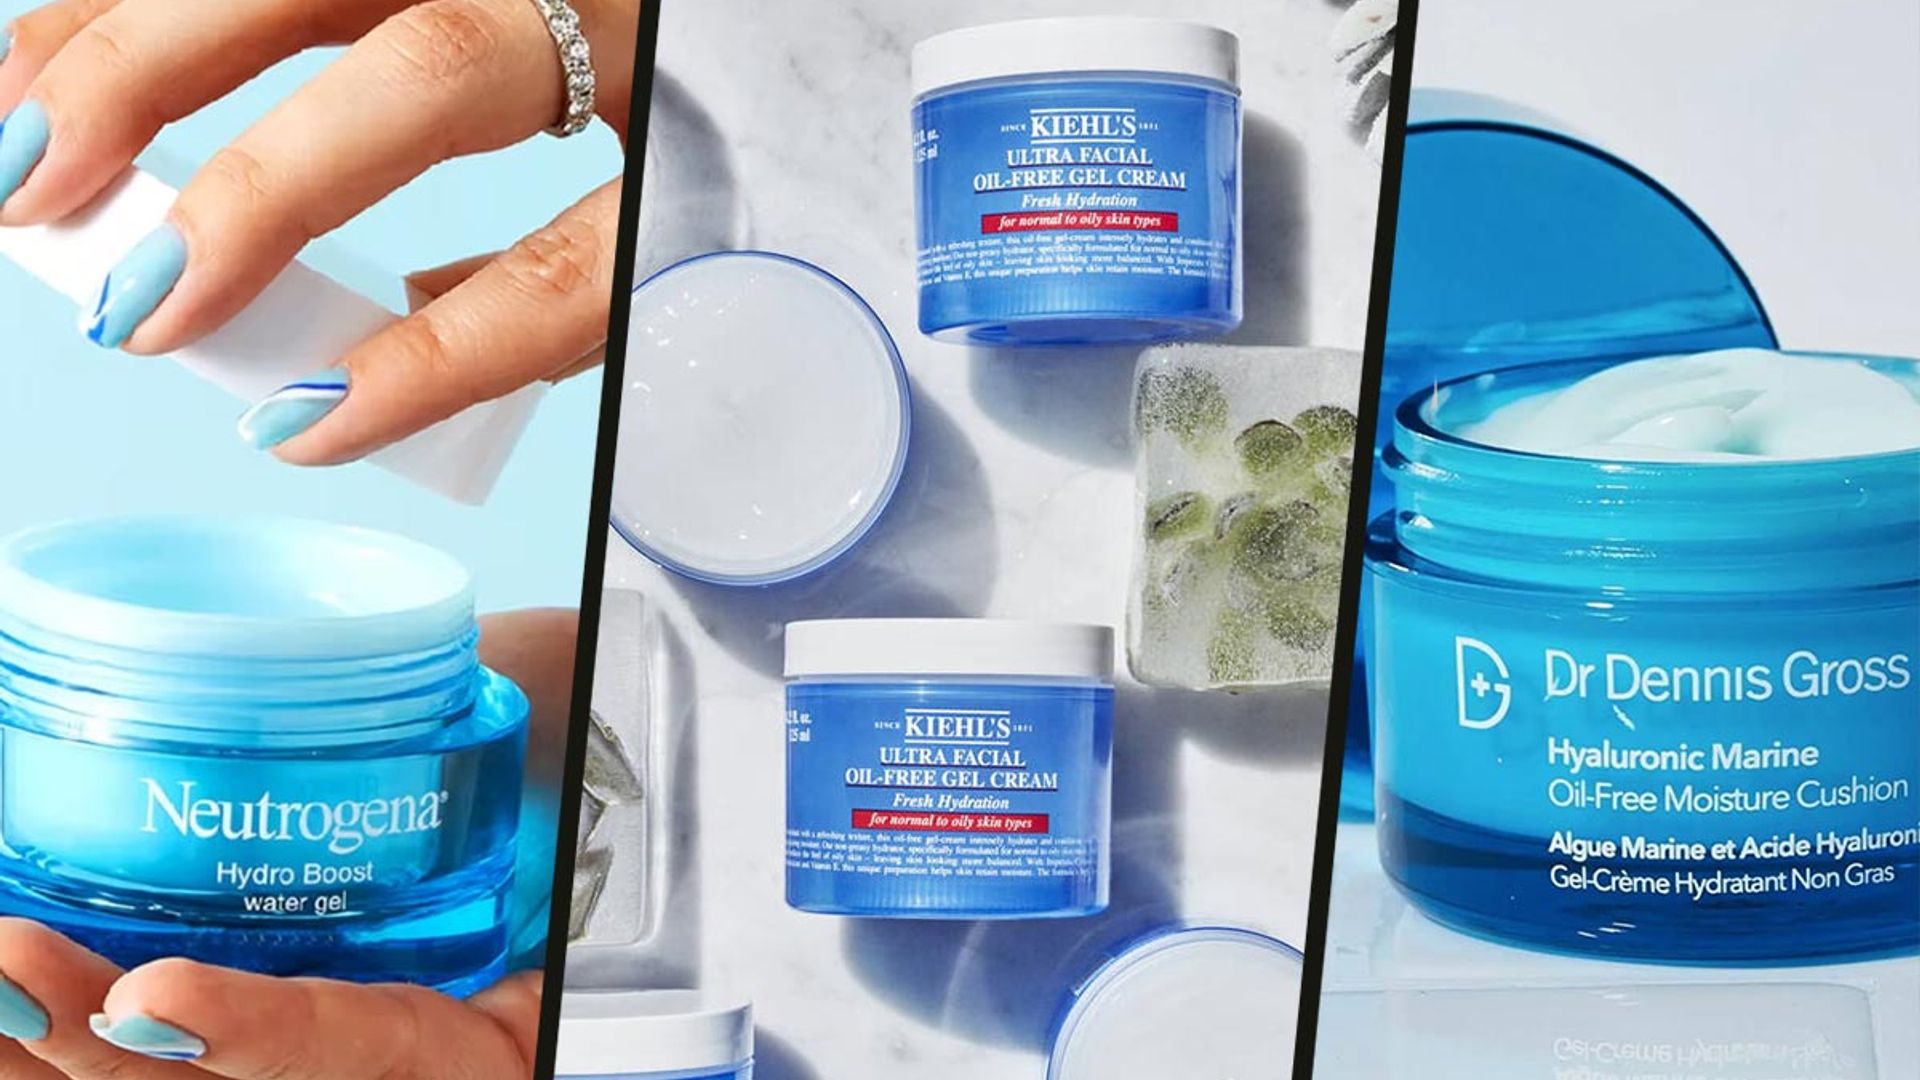 Meet BYOMA, New TikTok-Approved Skincare Brand